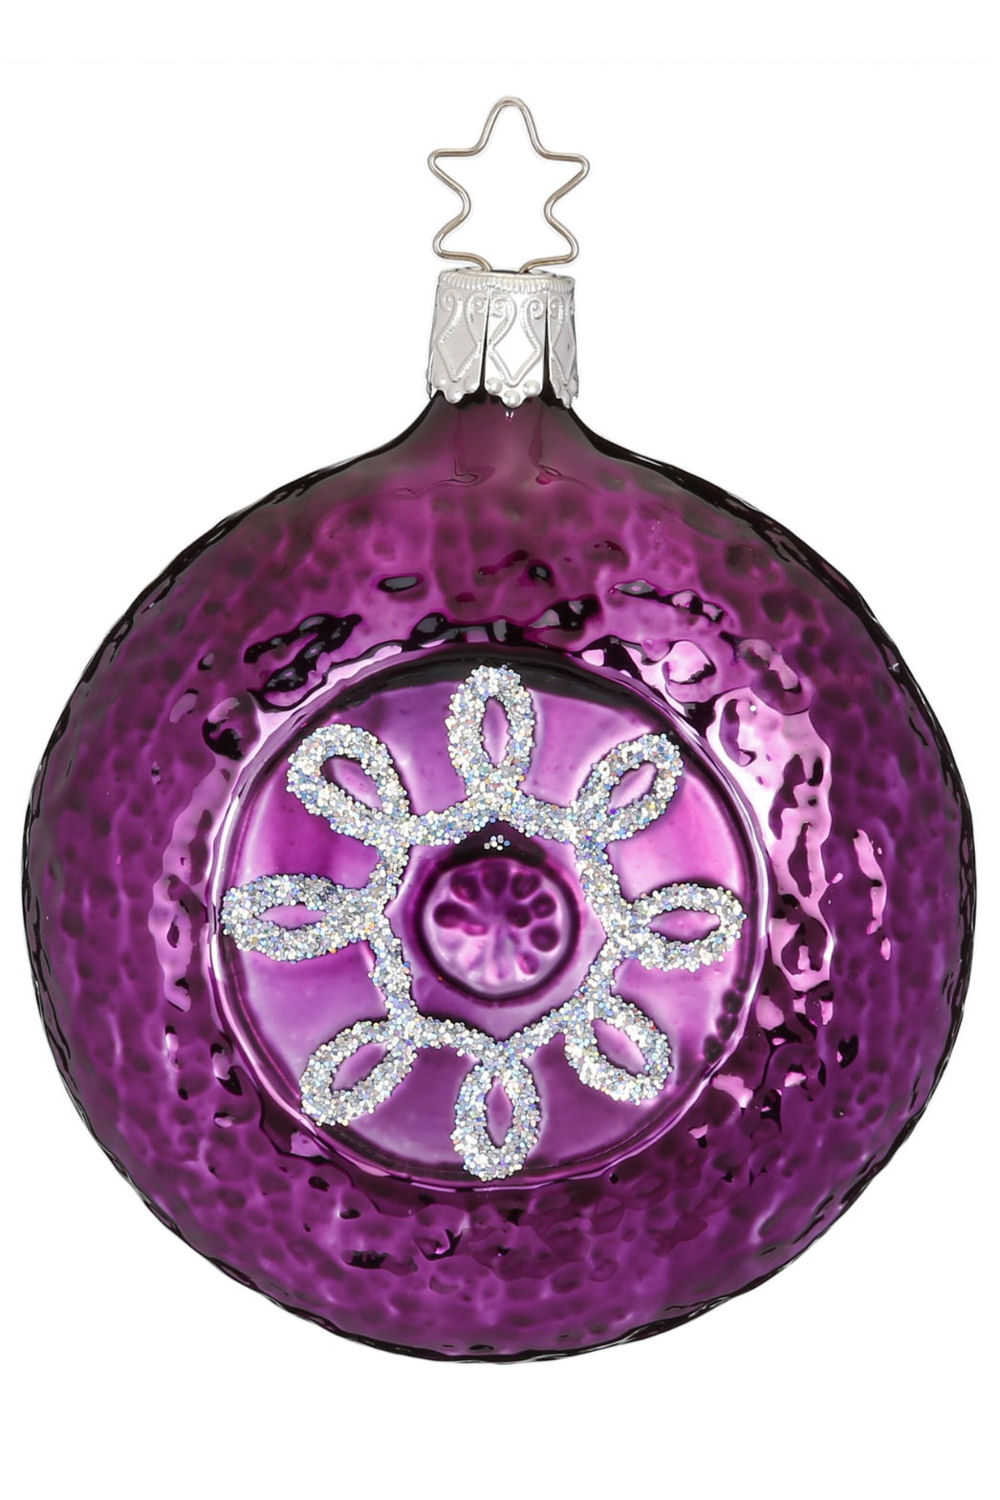 8cm INGE GLAS KUGEL PURPLE VIOLET MATT BALL GERMAN GLASS CHRISTMAS ORNAMENT